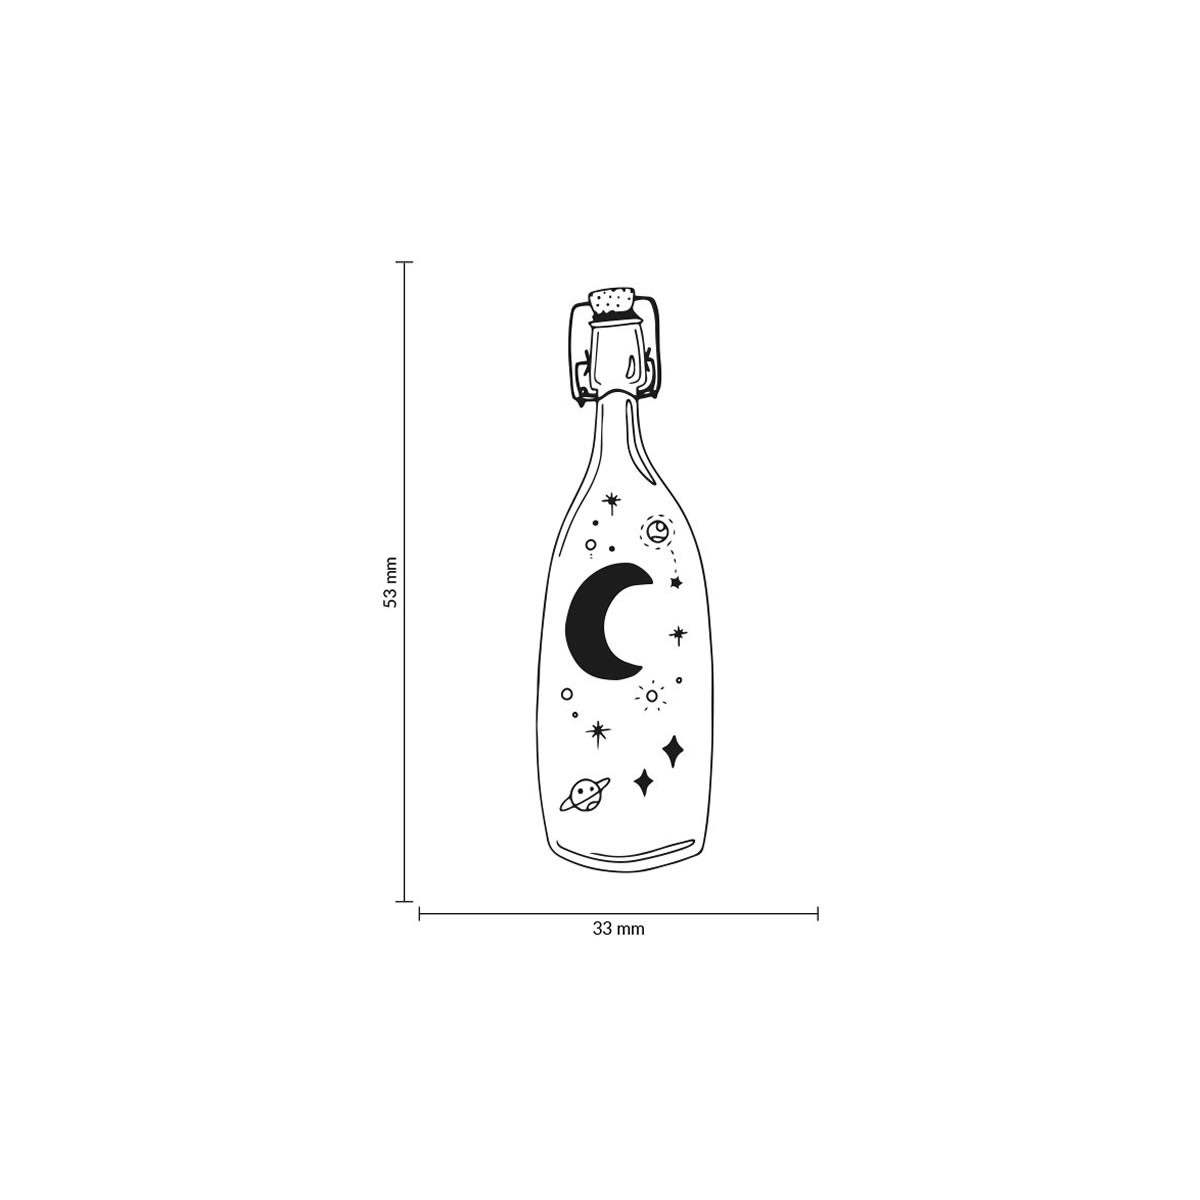 COLOP Arts & Crafts Ξύλινη Σφραγίδα May & Berry Μπουκάλι 35x55mm